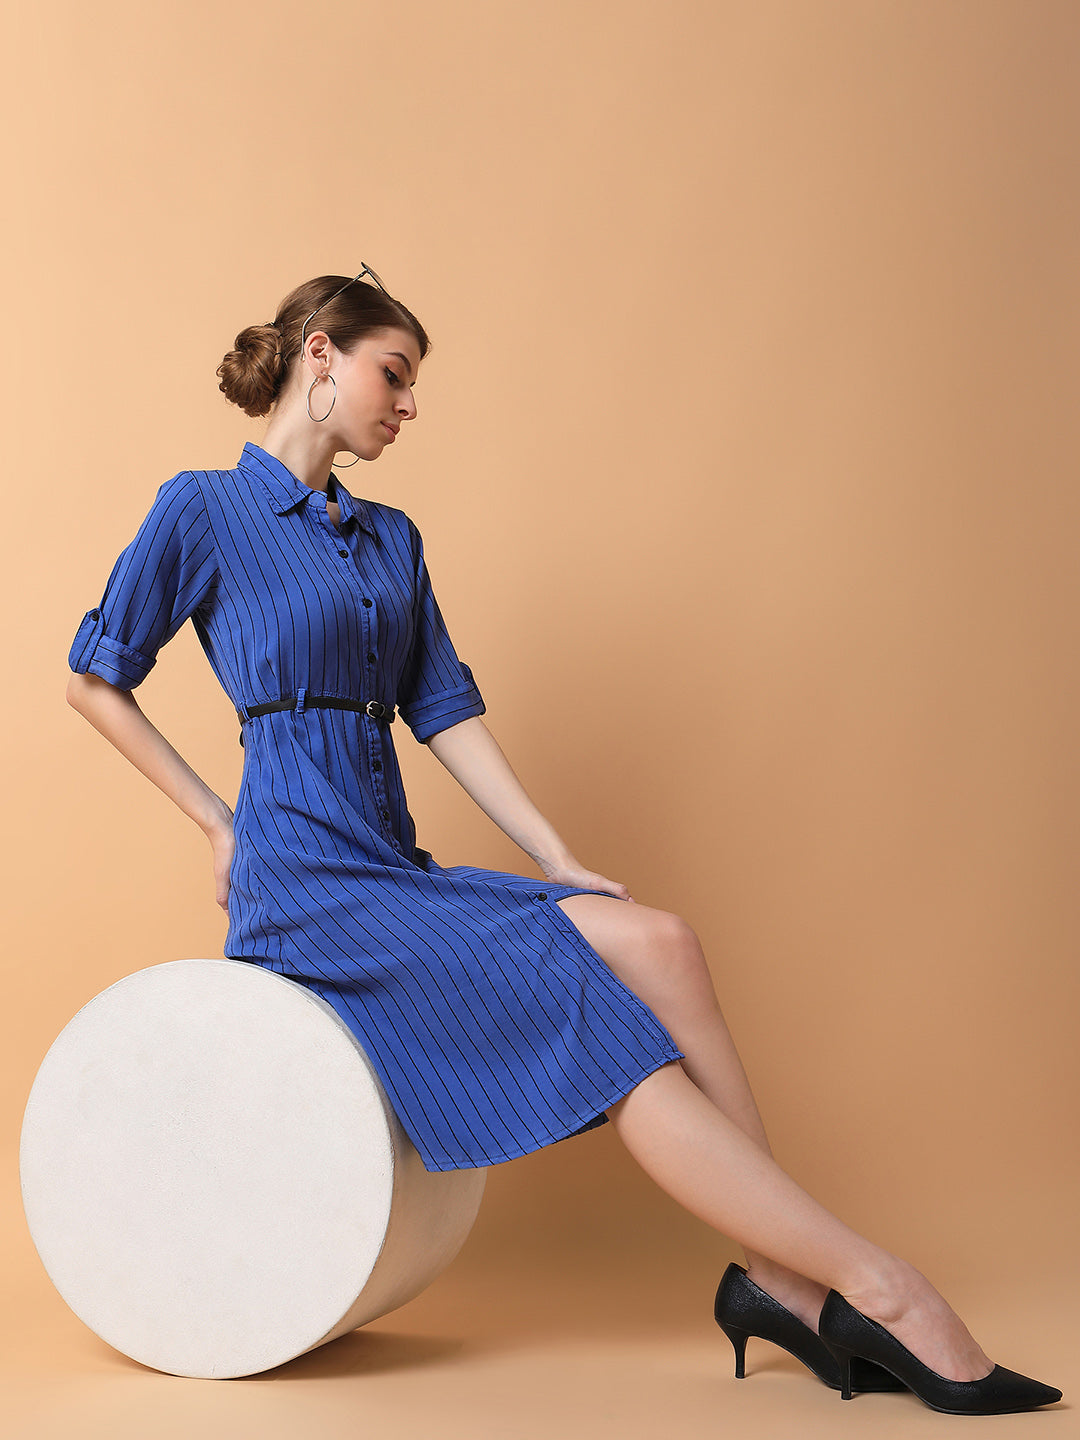 Women Striped Blue Midi A-Line Dress with Belt